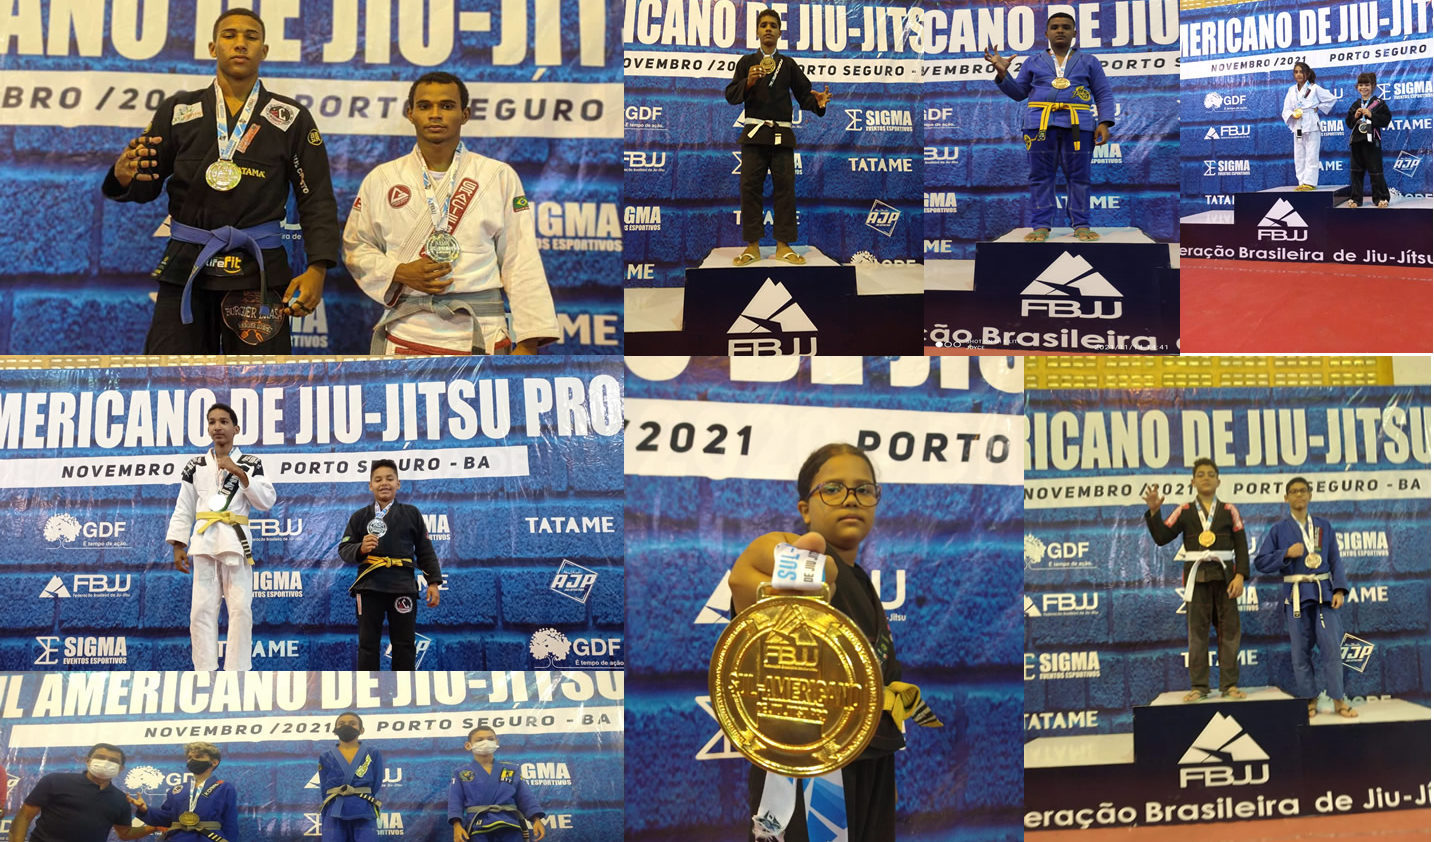 Equipe Arena Ao Combate brilha no Campeonato Sul Americano de JiuJitsu